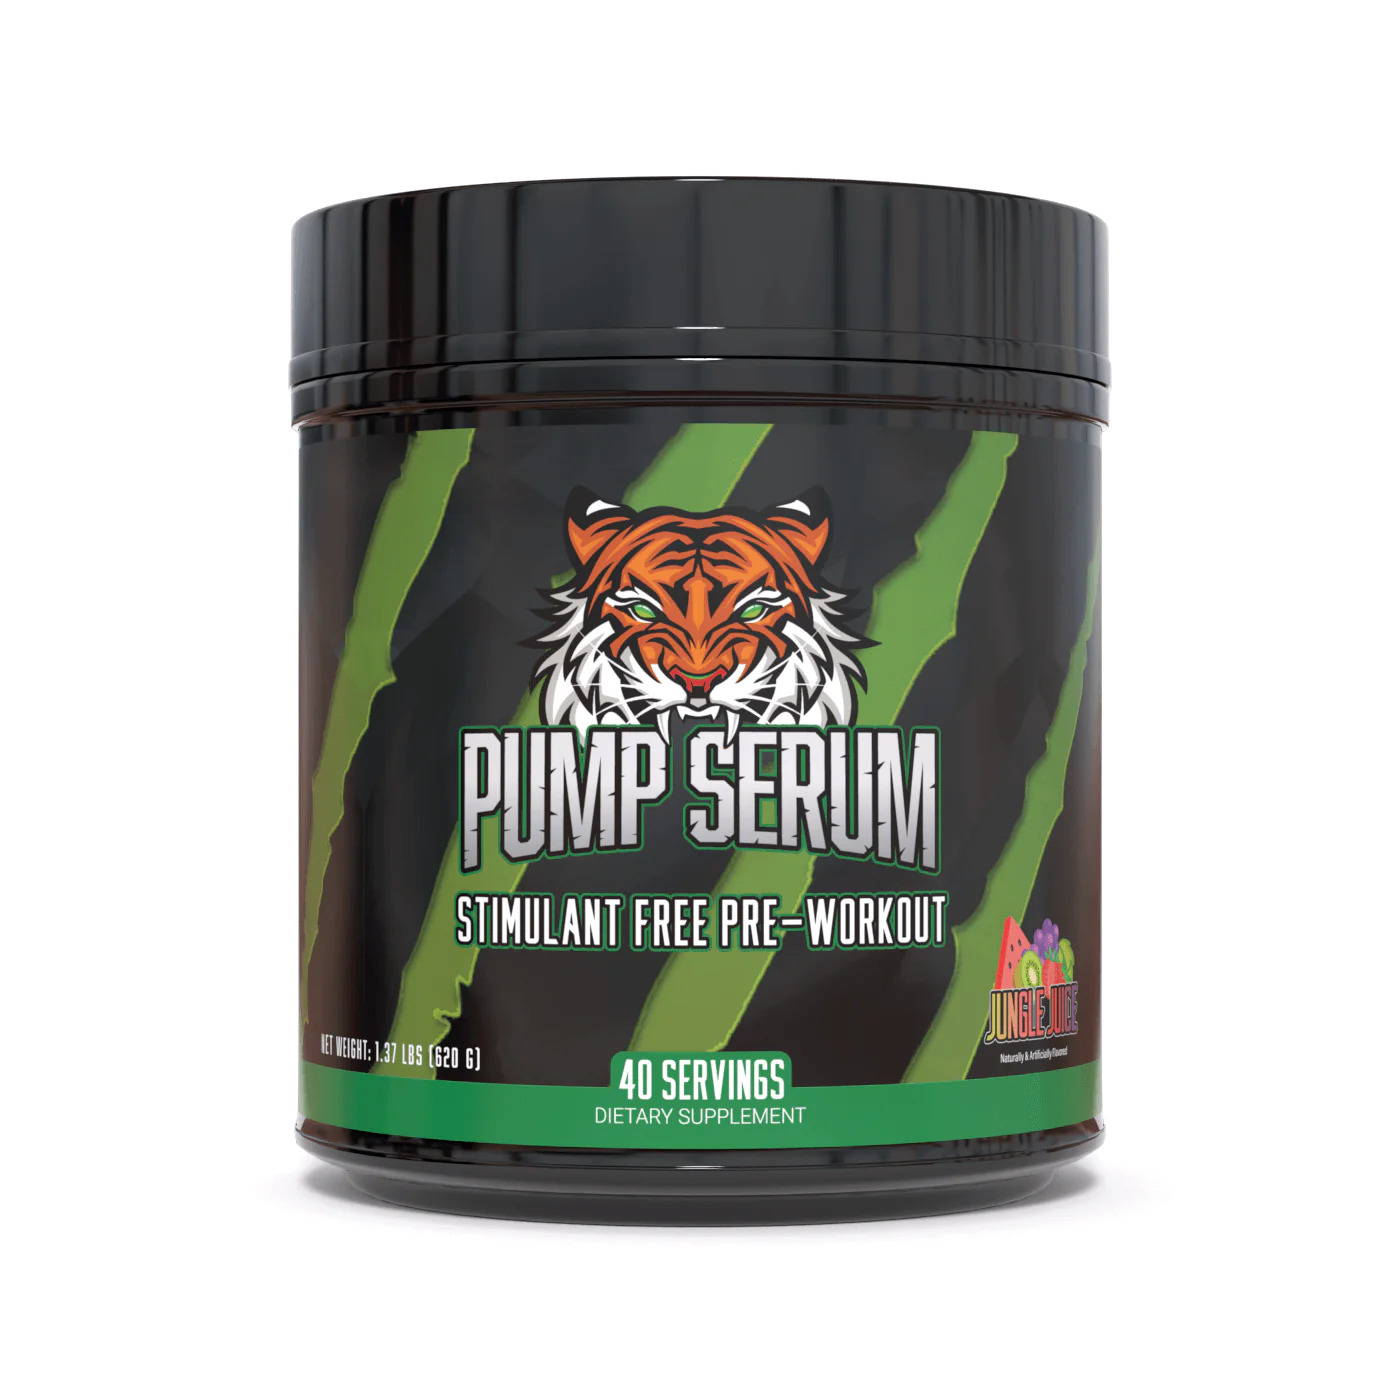 pump serum stimulant free pre workout